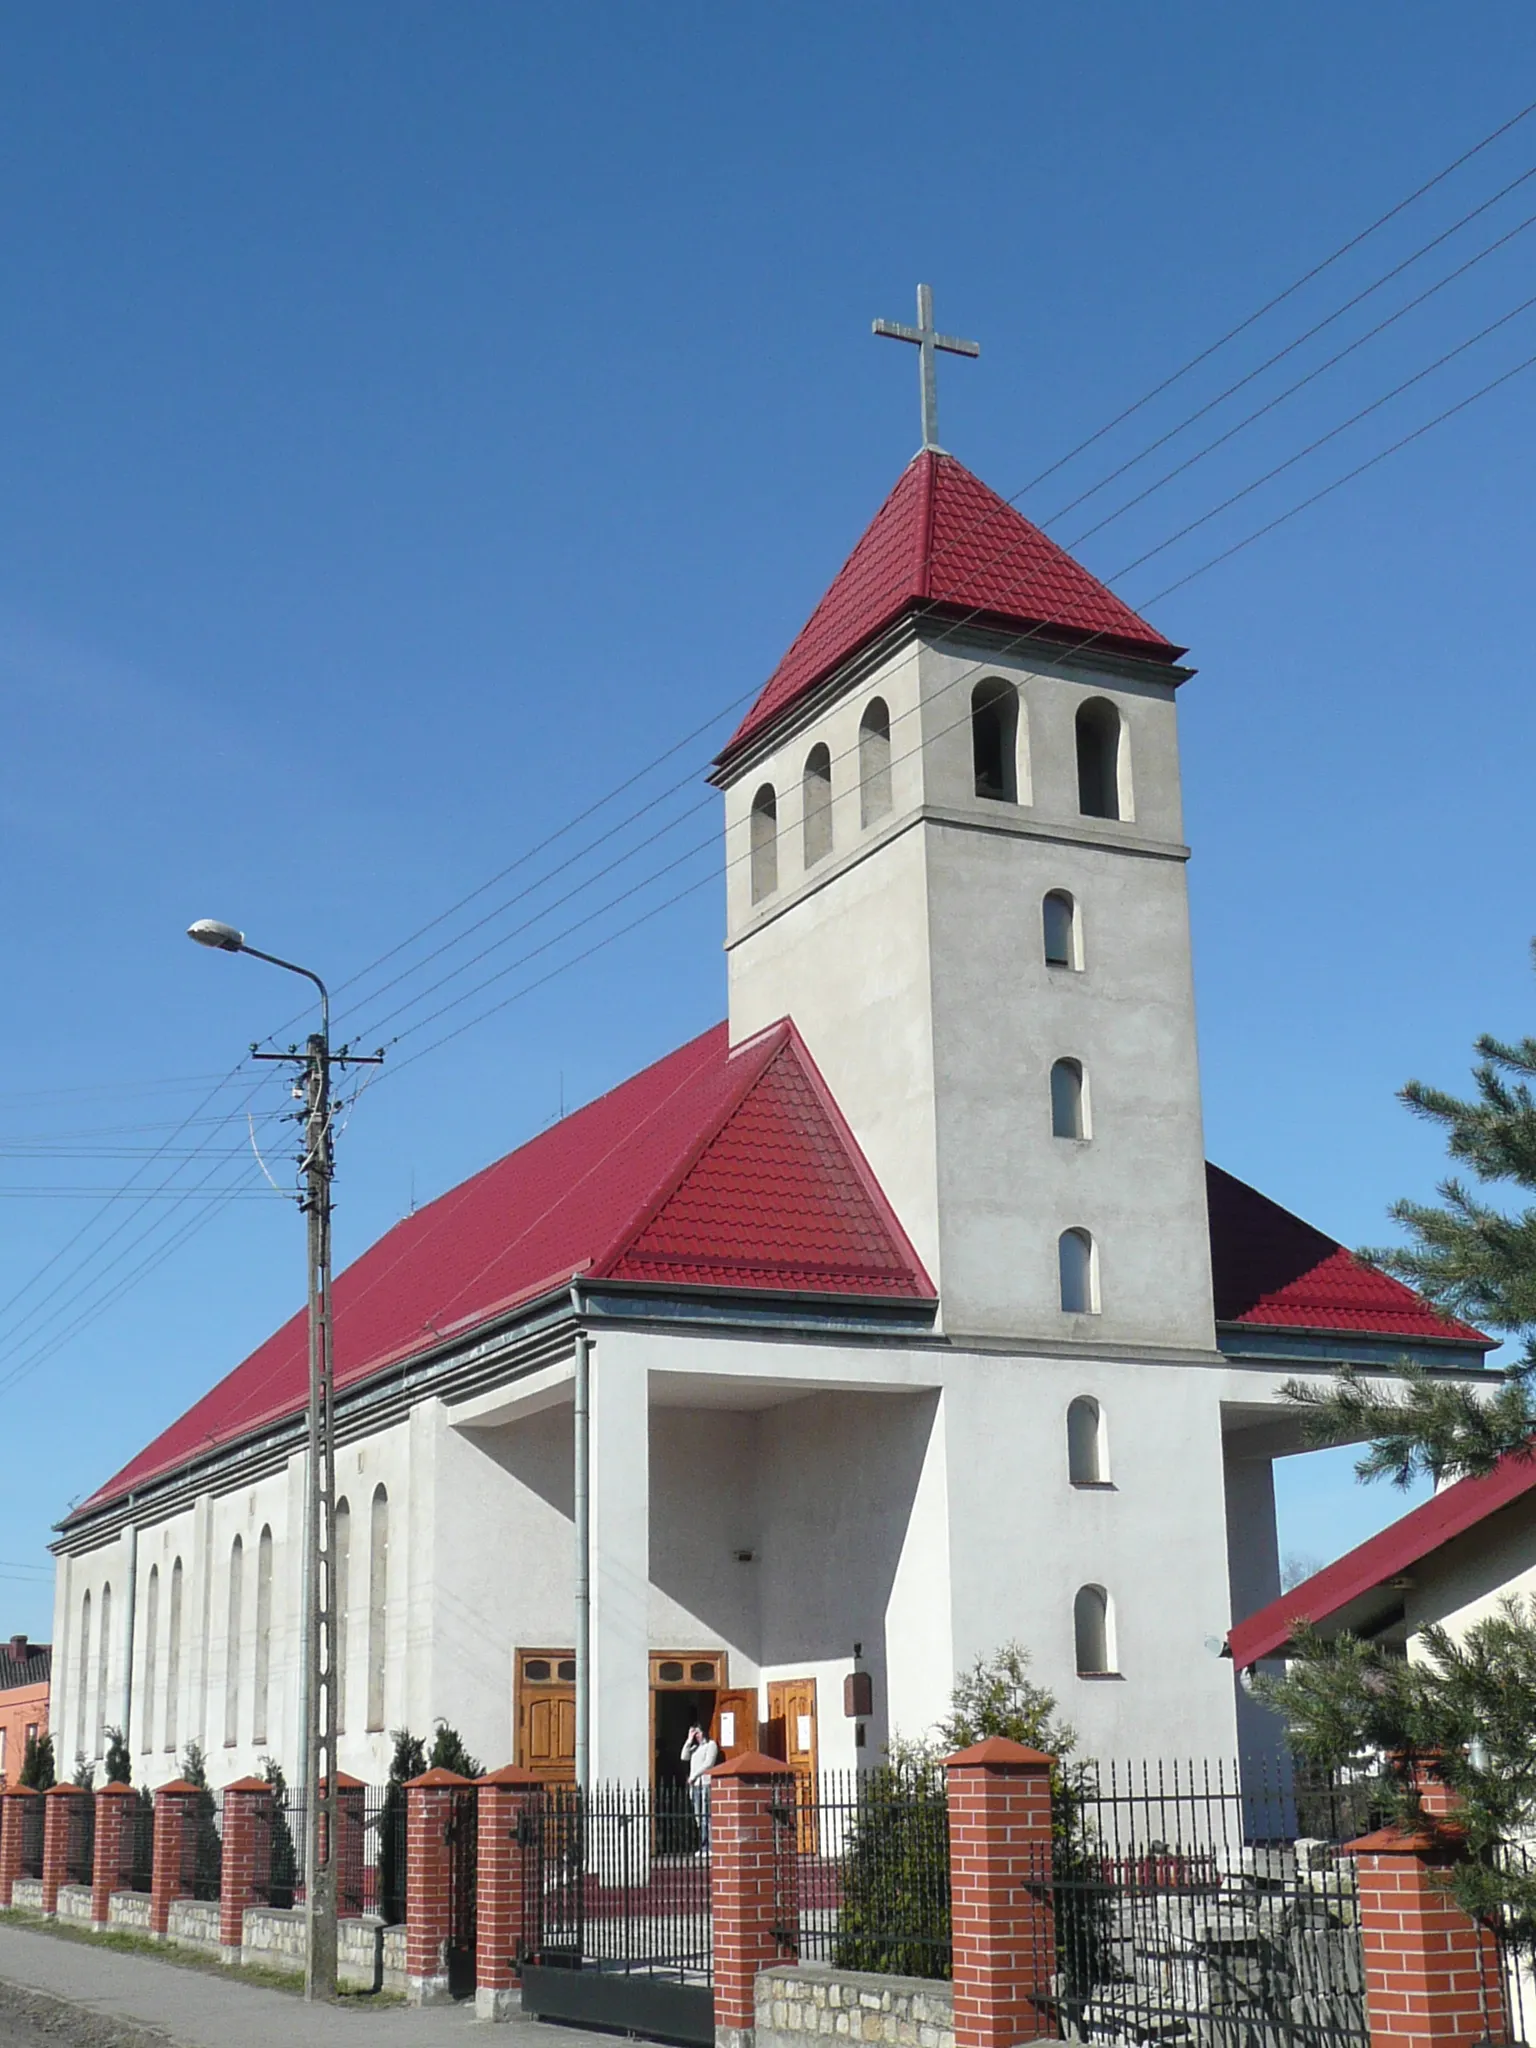 Photo showing: The church in Kołaczkowo, Poland.